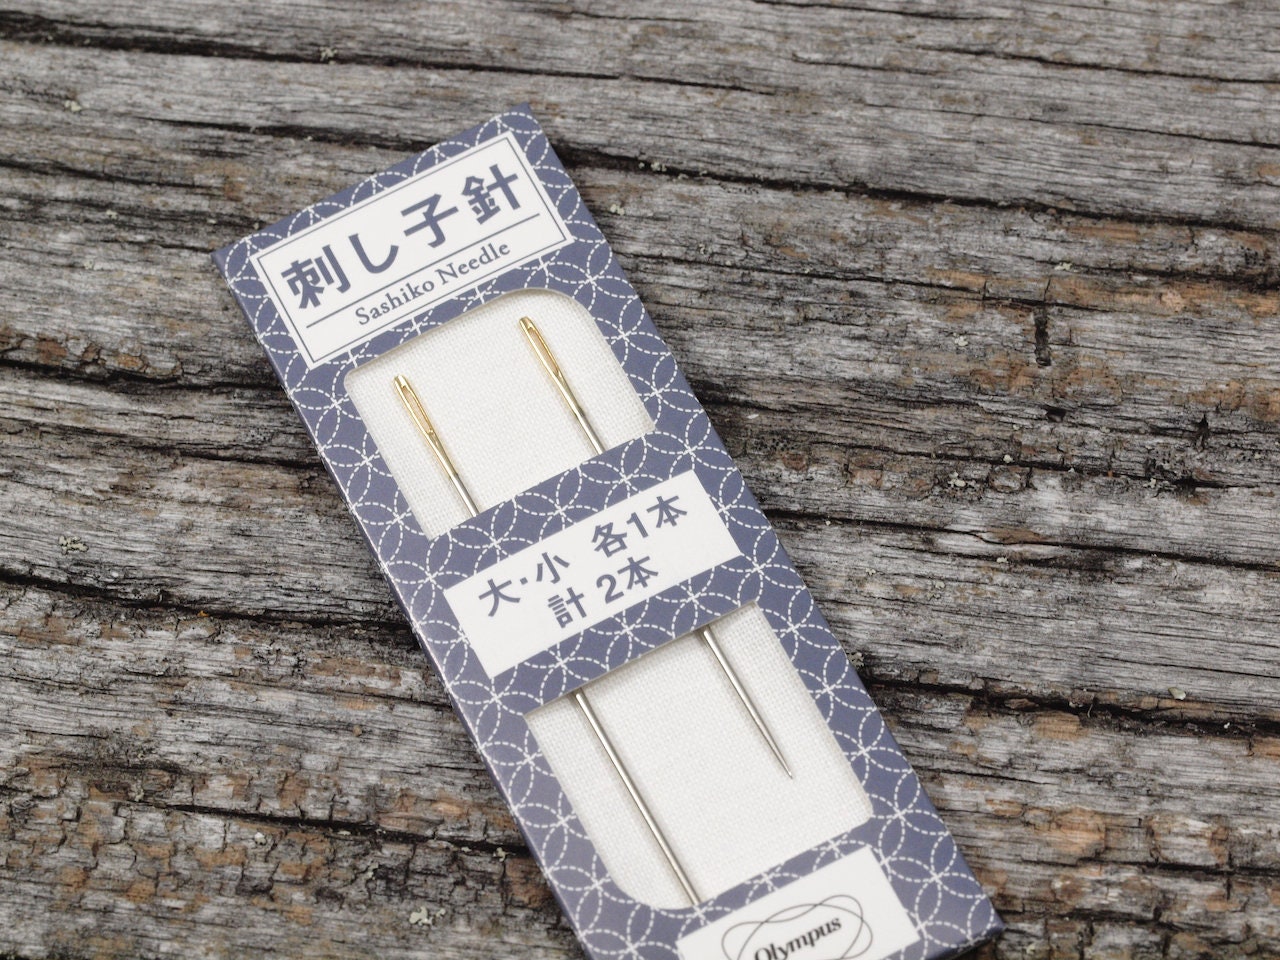 Sashiko Needles - Assorted (4) From Olympus - Needles Pins and